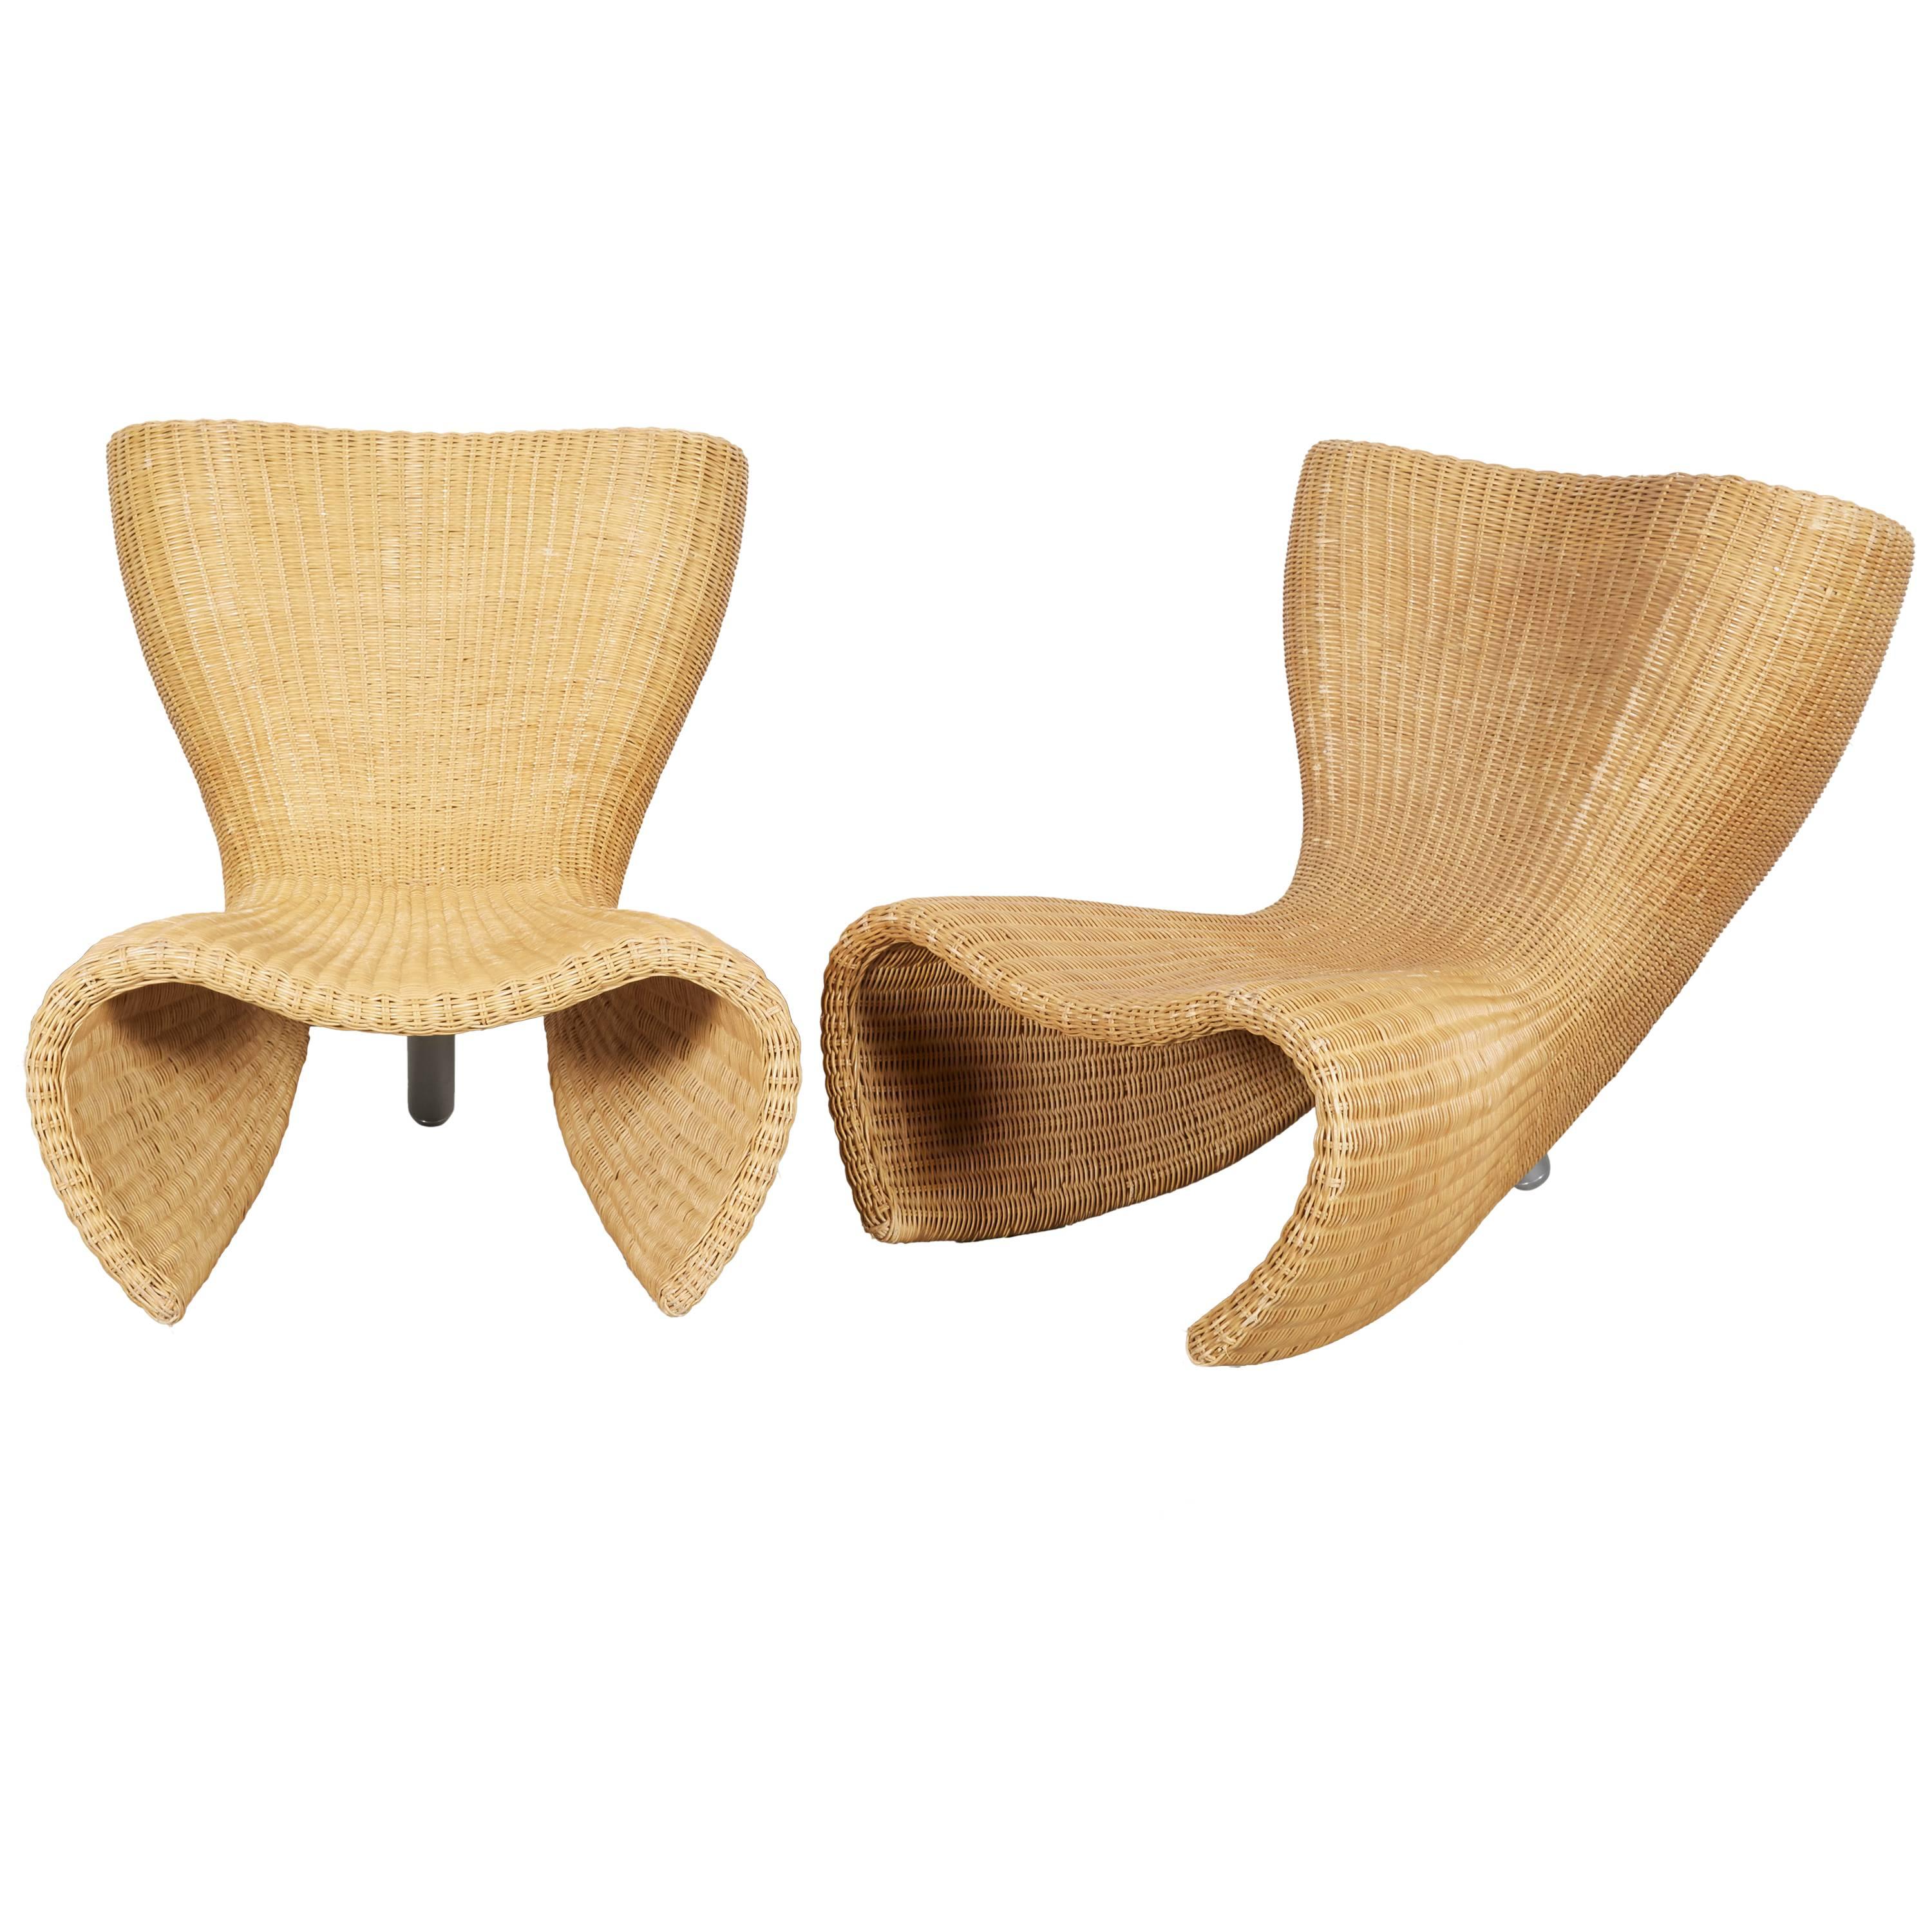 Marc Newson "Felt" Wicker Chairs